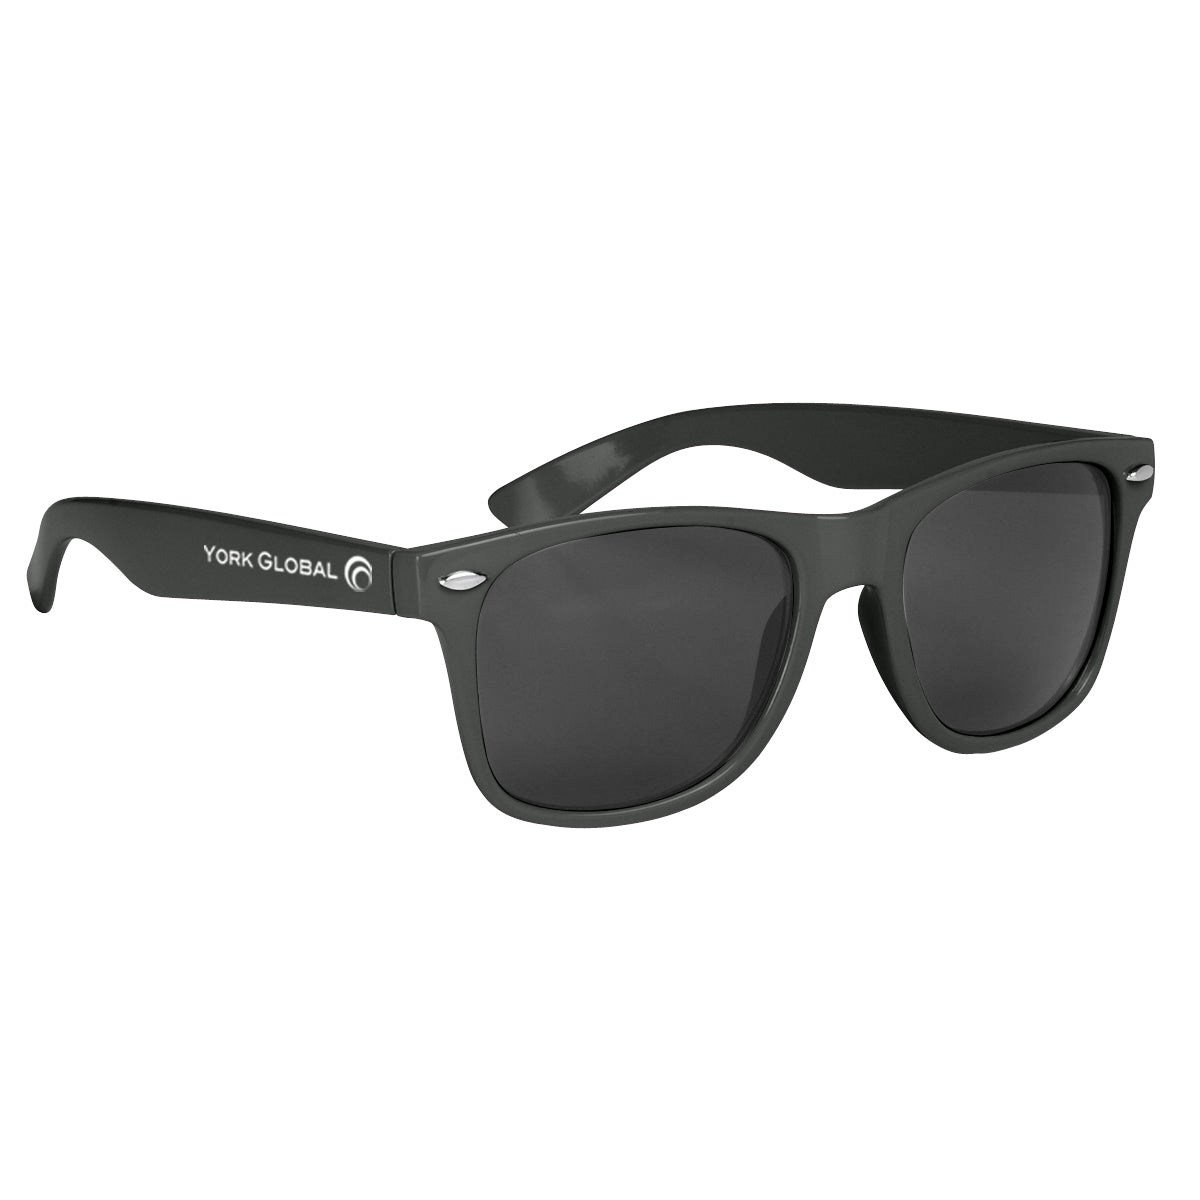 Malibu Sunglasses Sunglasses Hit Promo Black Single Color 